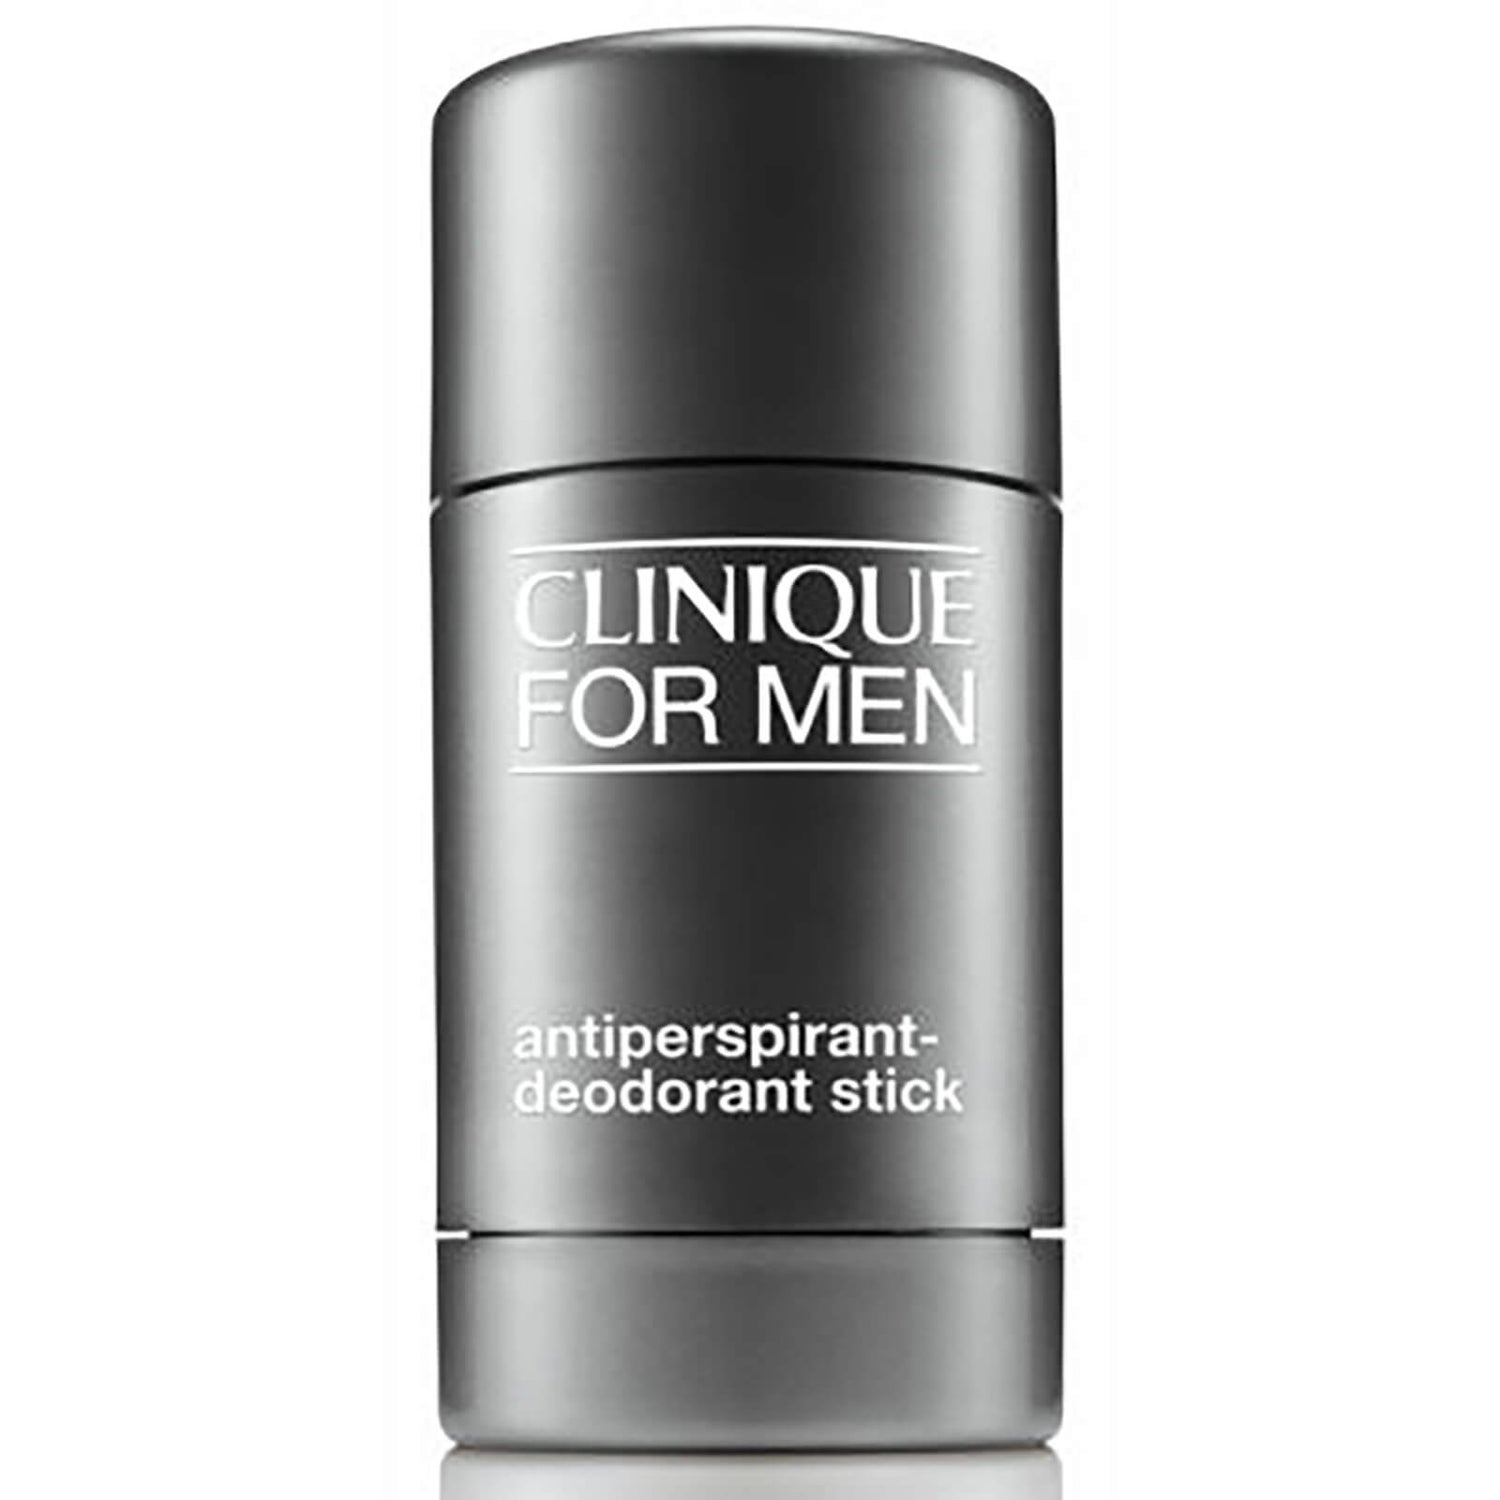 Clinique for Men stick déodorant anti-transpirant (75g)